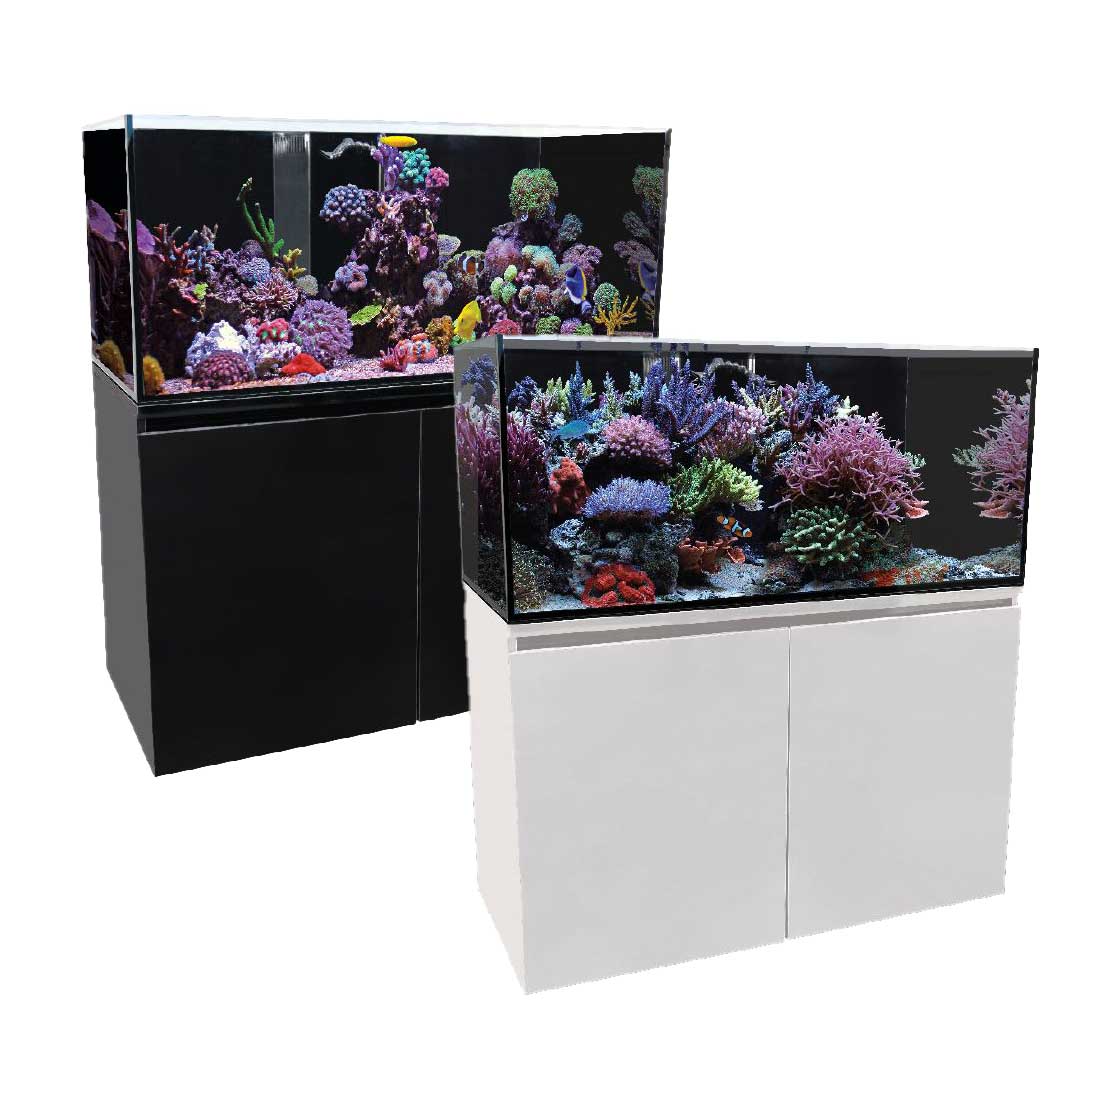 Aqua One ReefSys 326 Marine Aquarium Kit